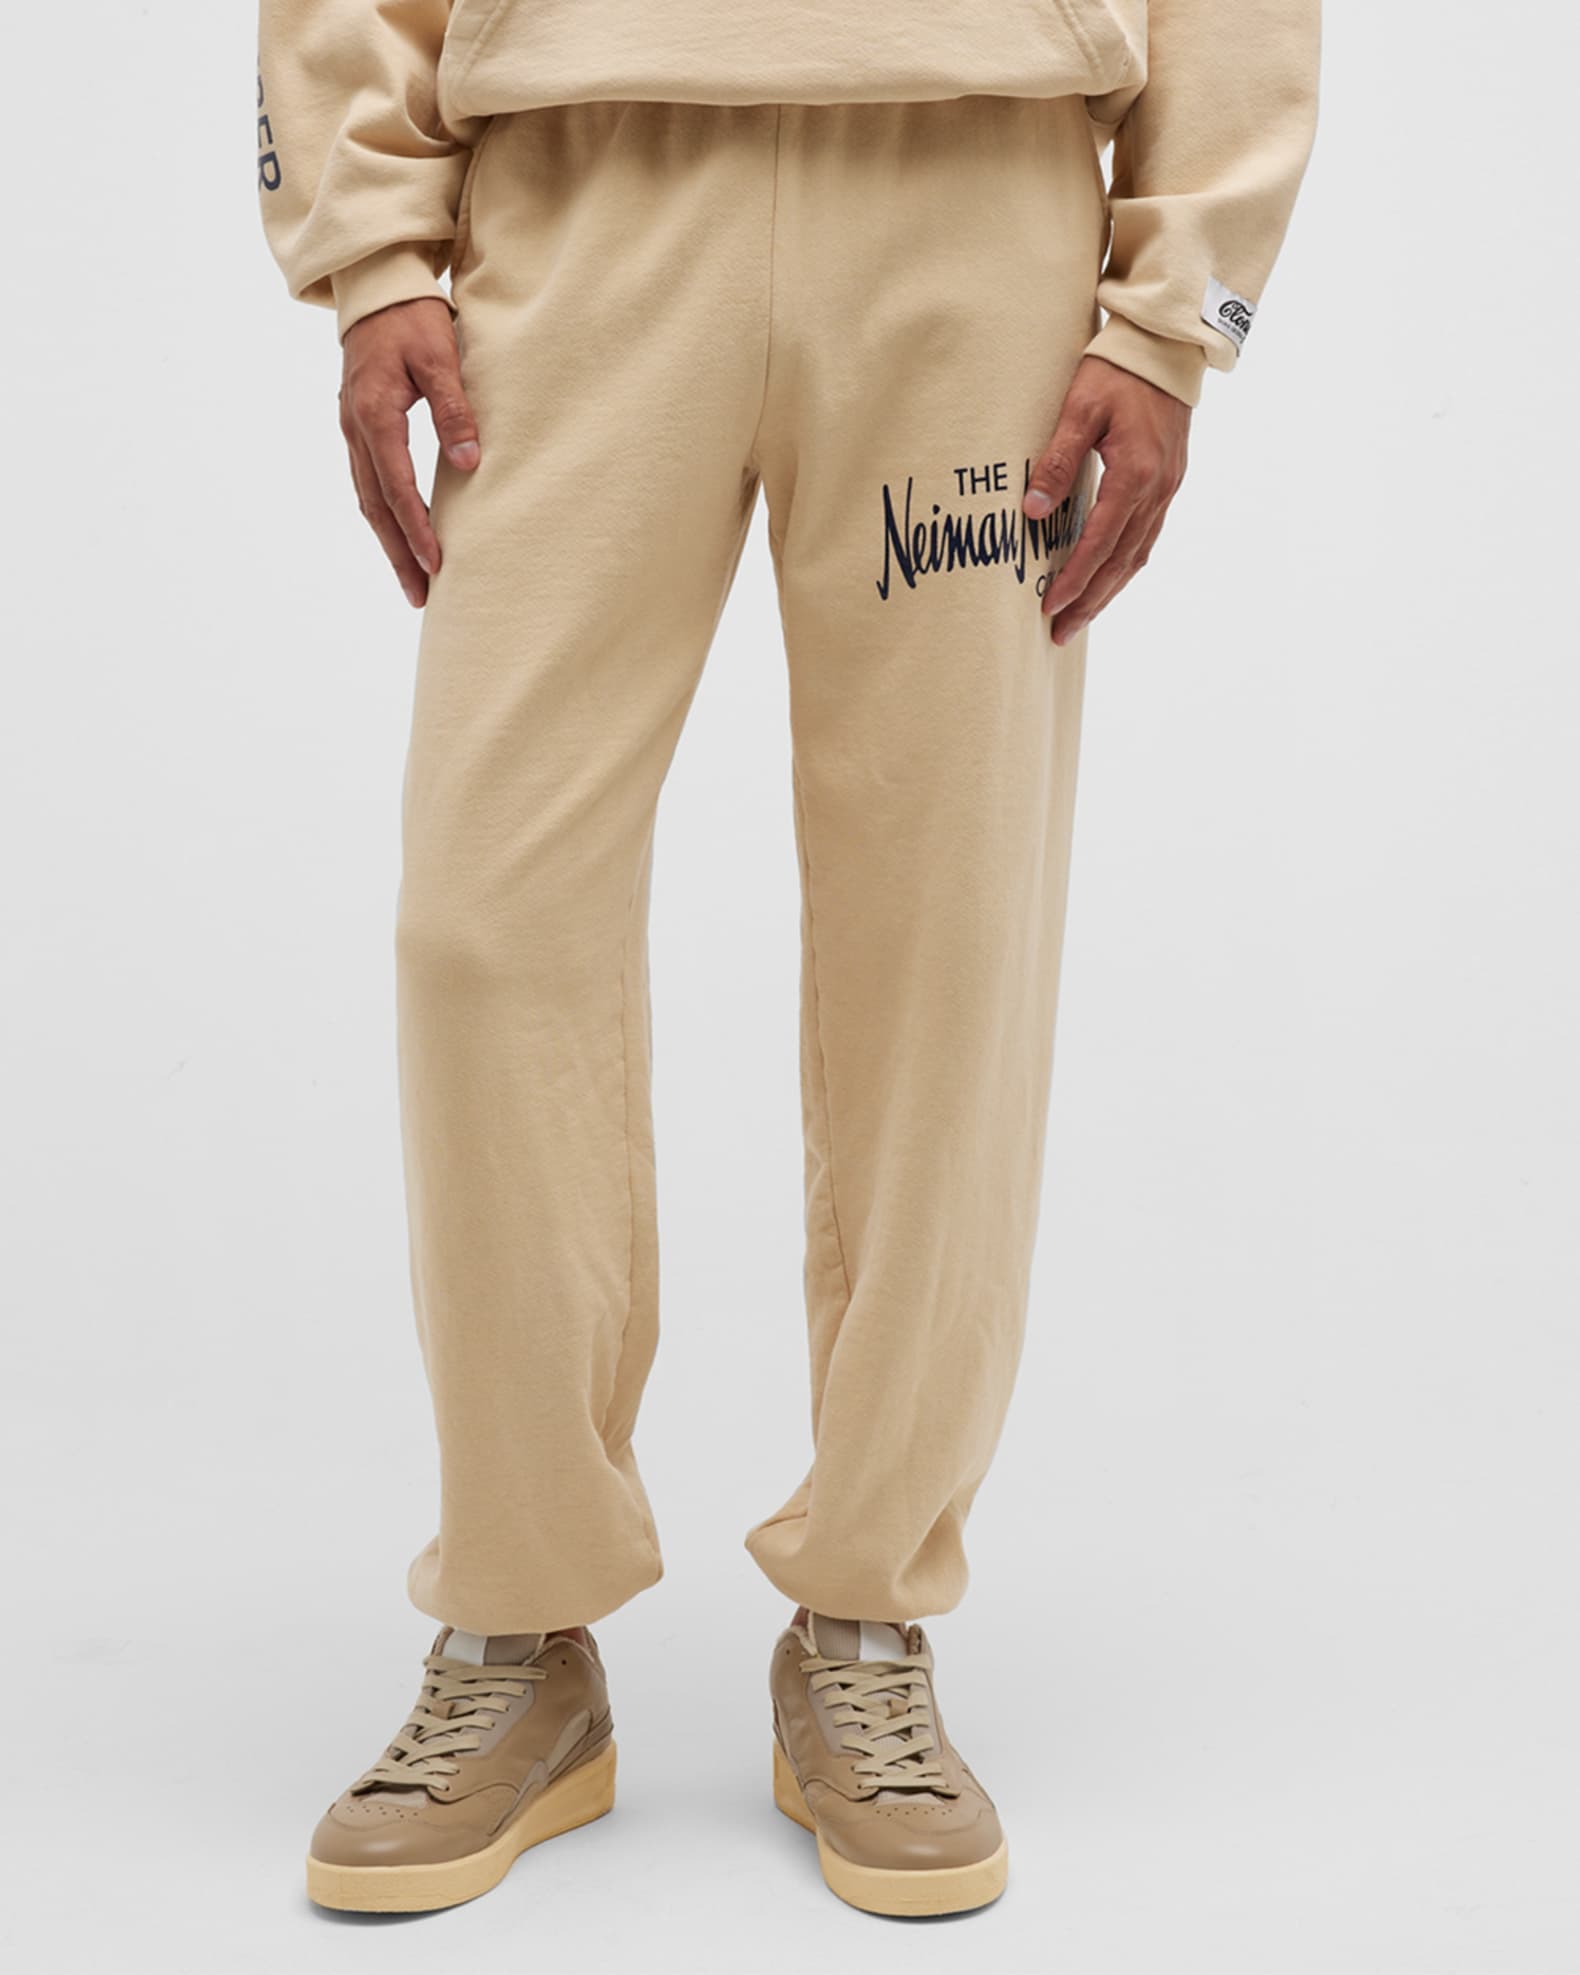 CLONEY Men's Neiman Marcus City Club Jogger Pants | Neiman Marcus